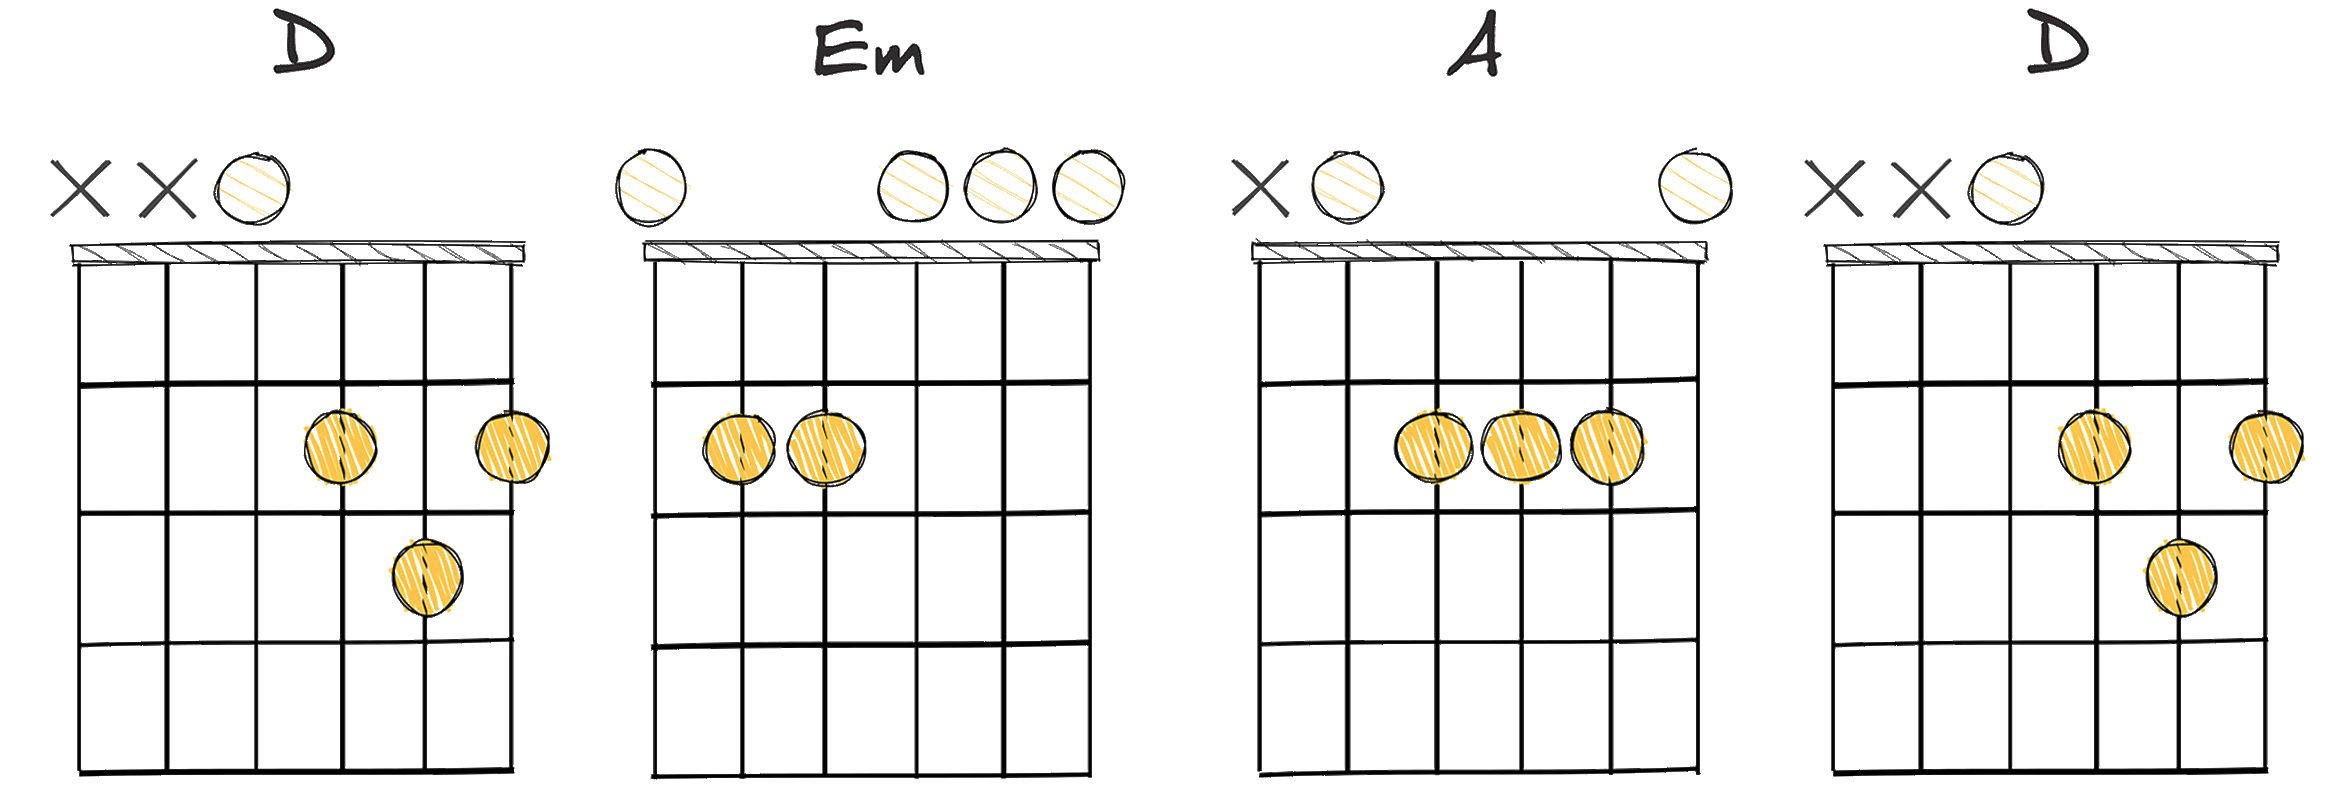 I-ii-V-I (1-2-5-1) chords diagram